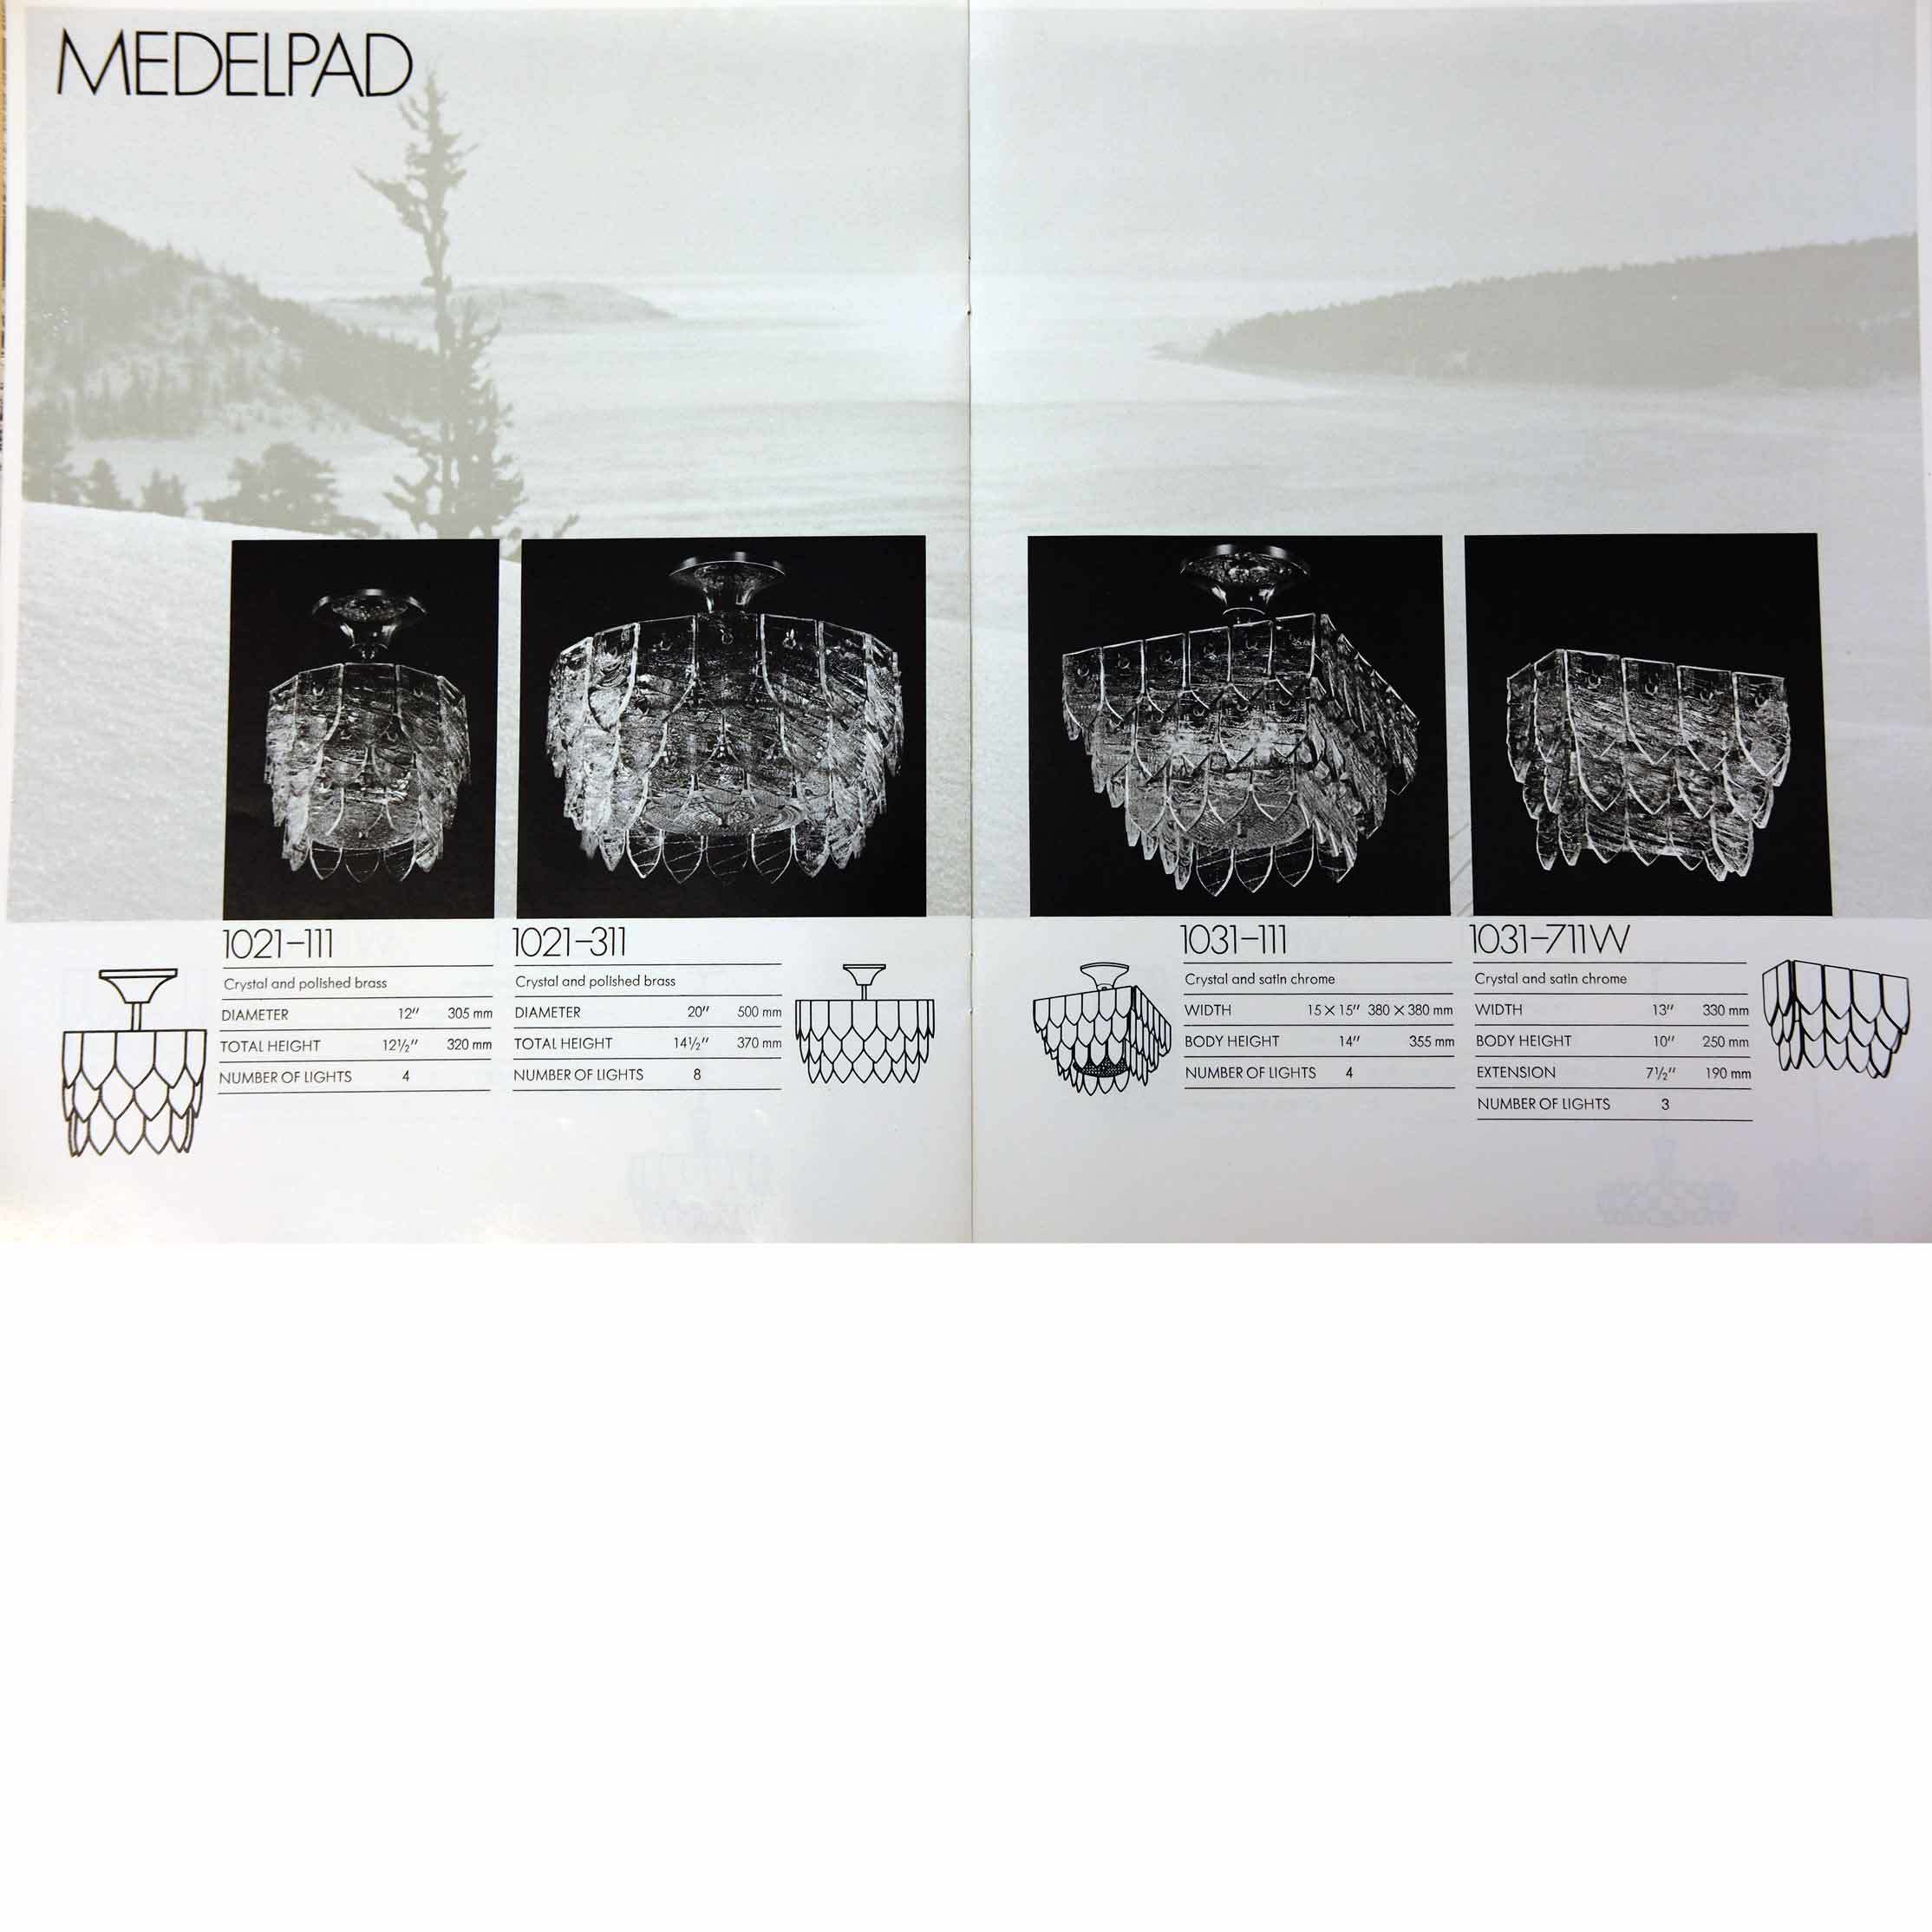 Katalog ljuskrona "Medelpad" 1968